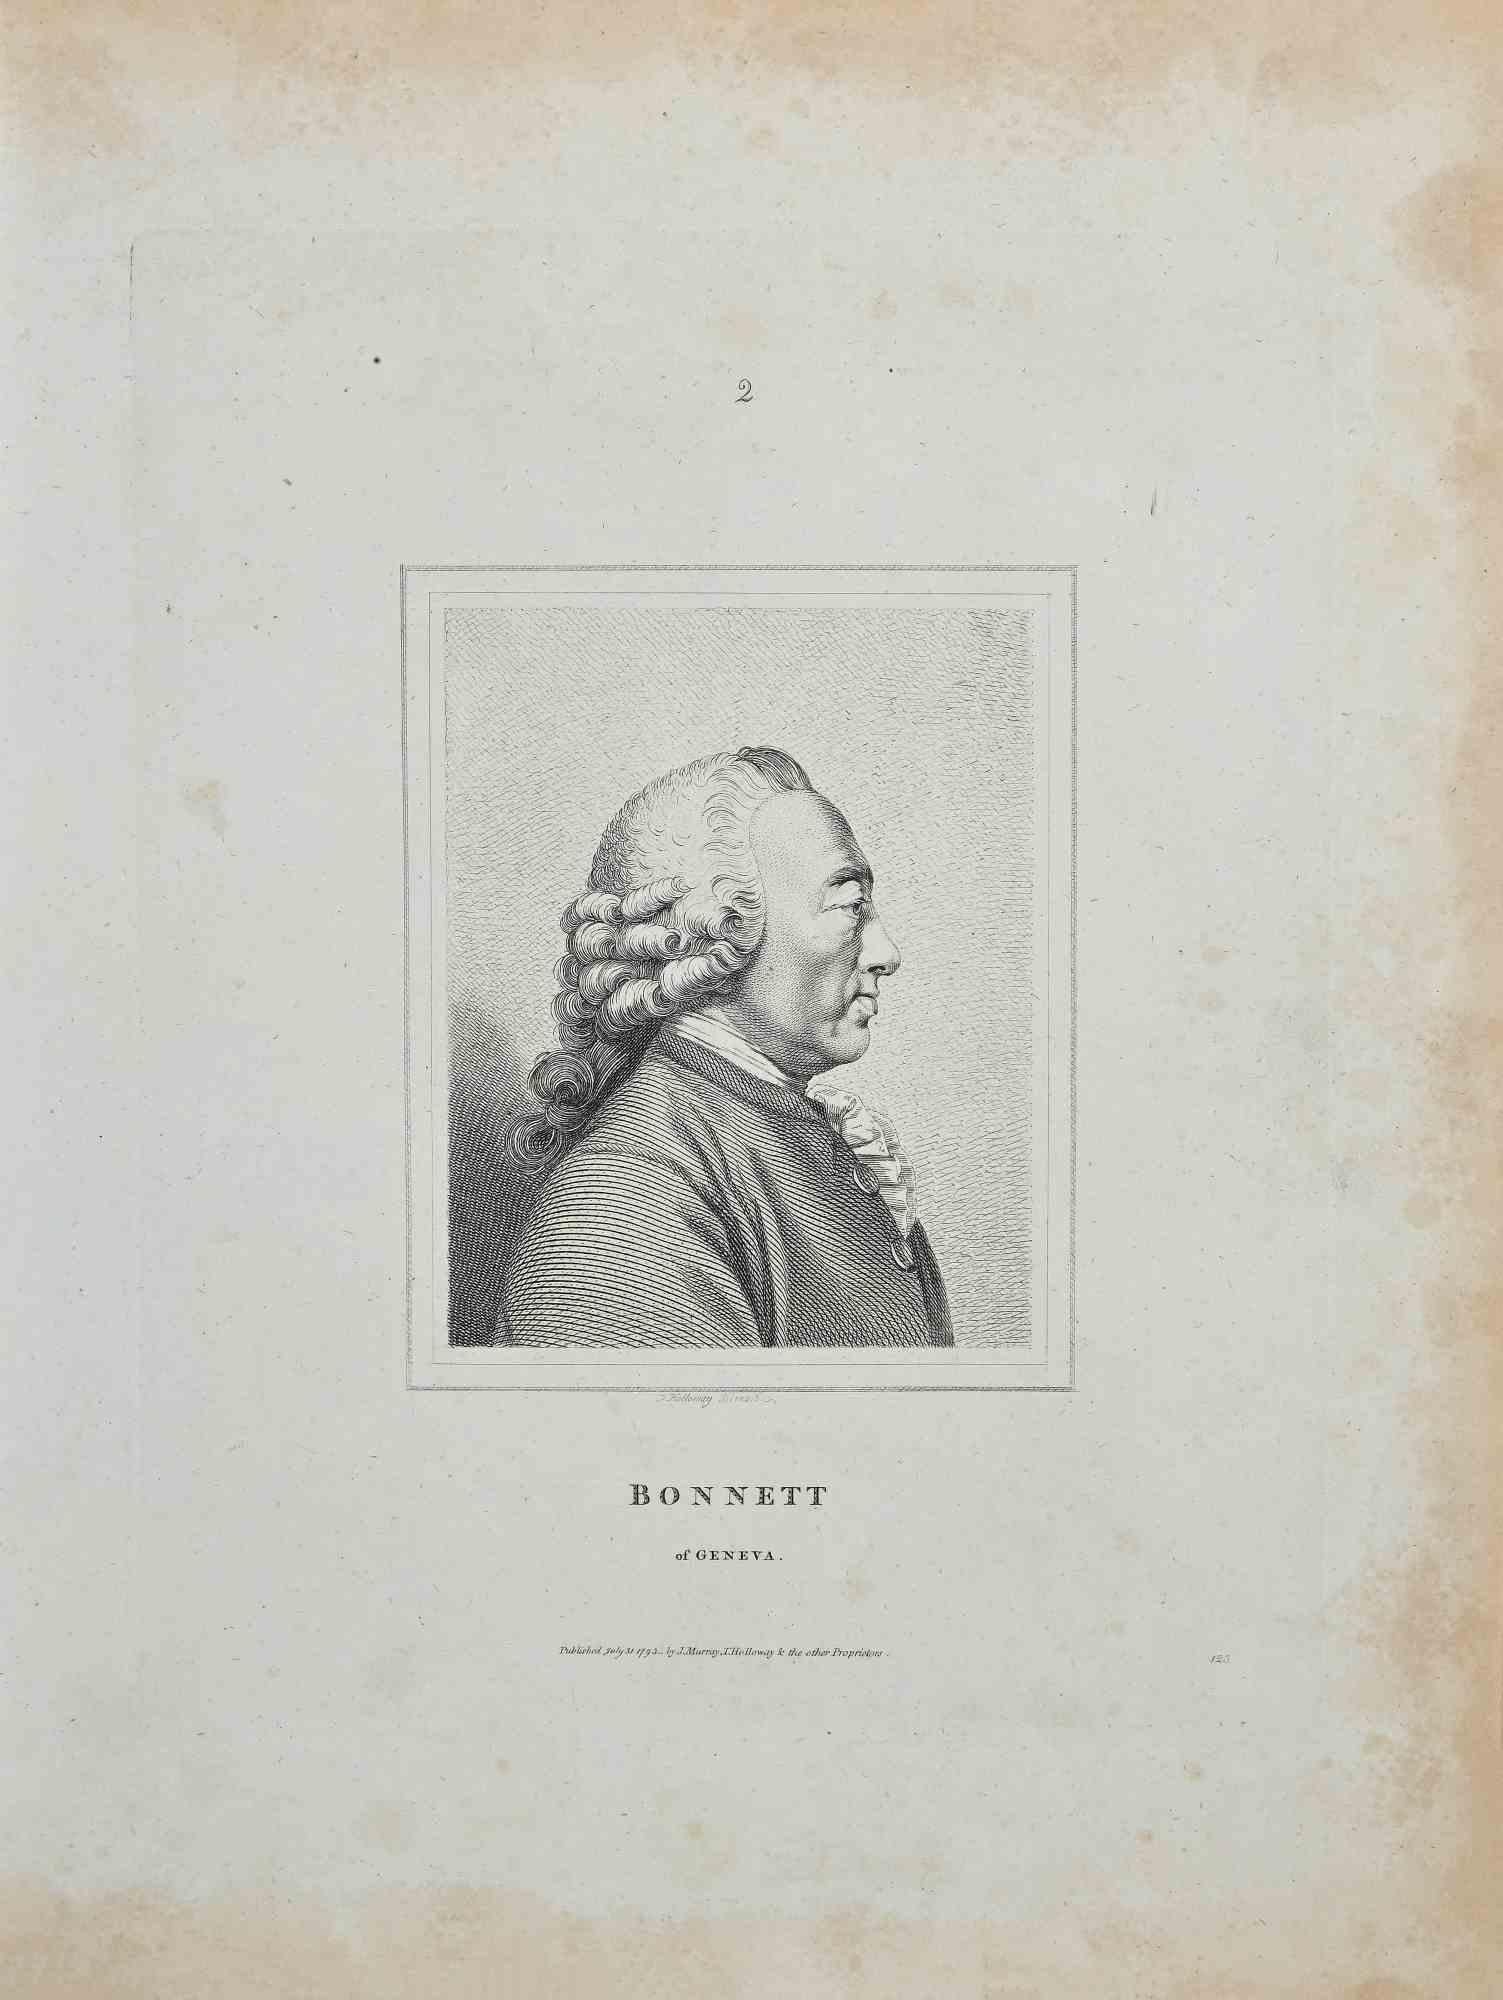 Portrait of Bonnett of Geneva - Original Etching by Thomas Holloway - 1810